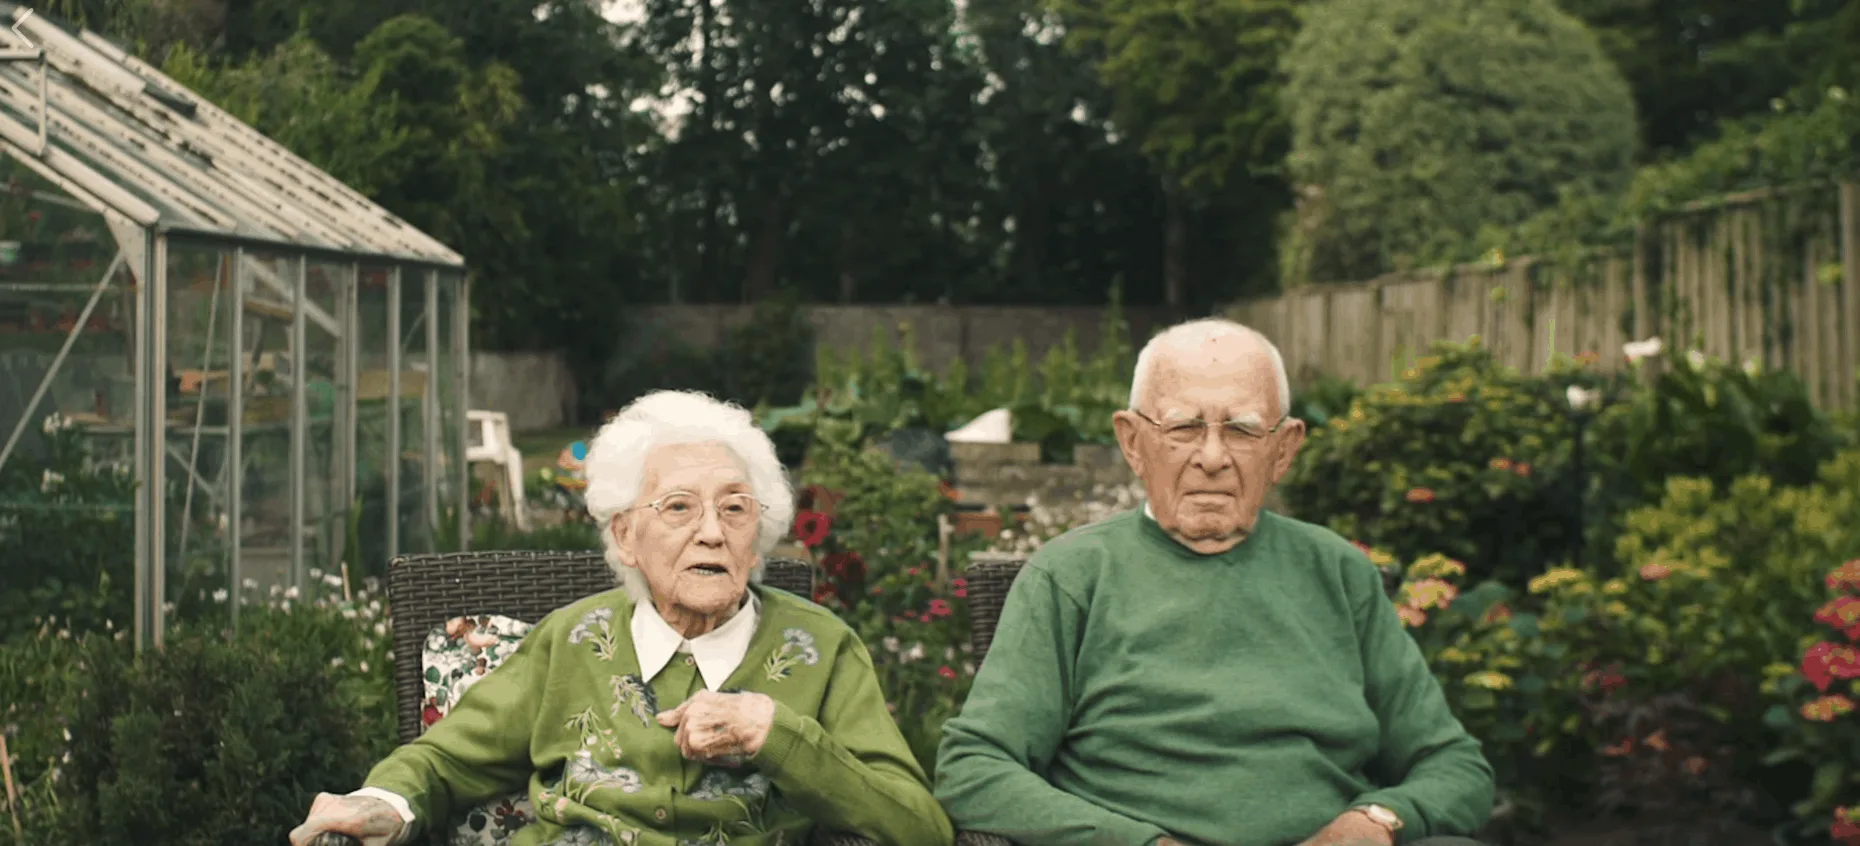 Irish couple 101 and 95 years old